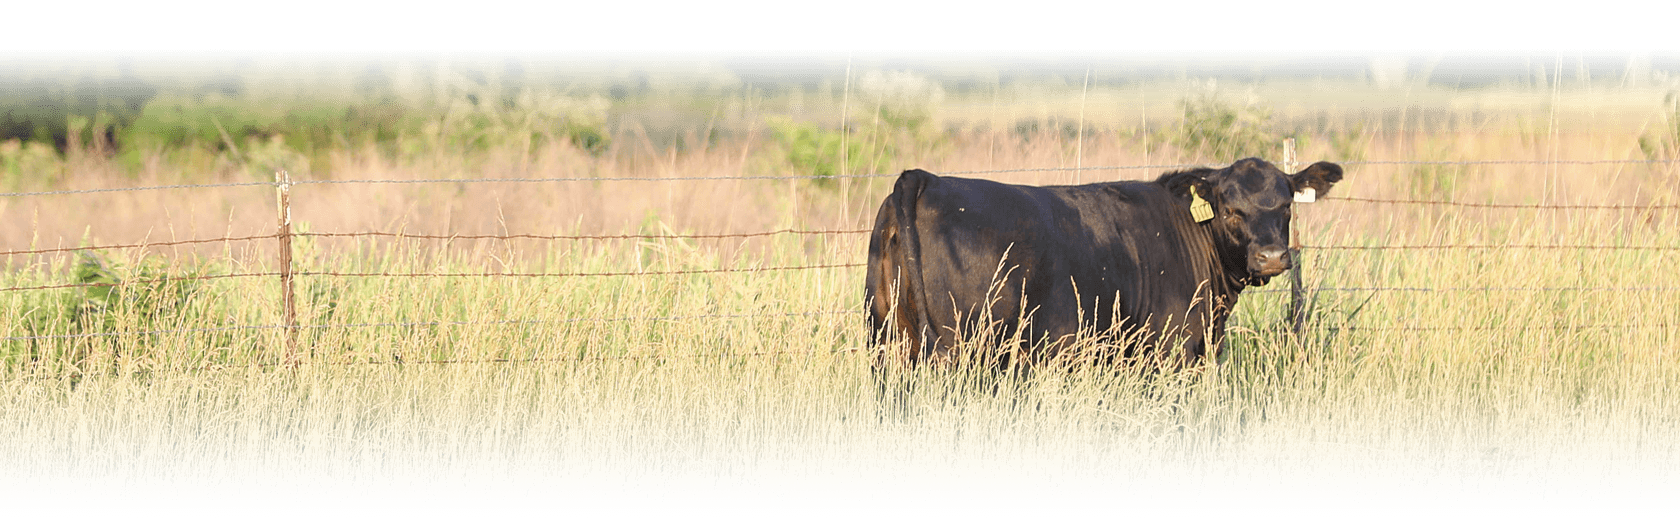 Bull in Tall Grass